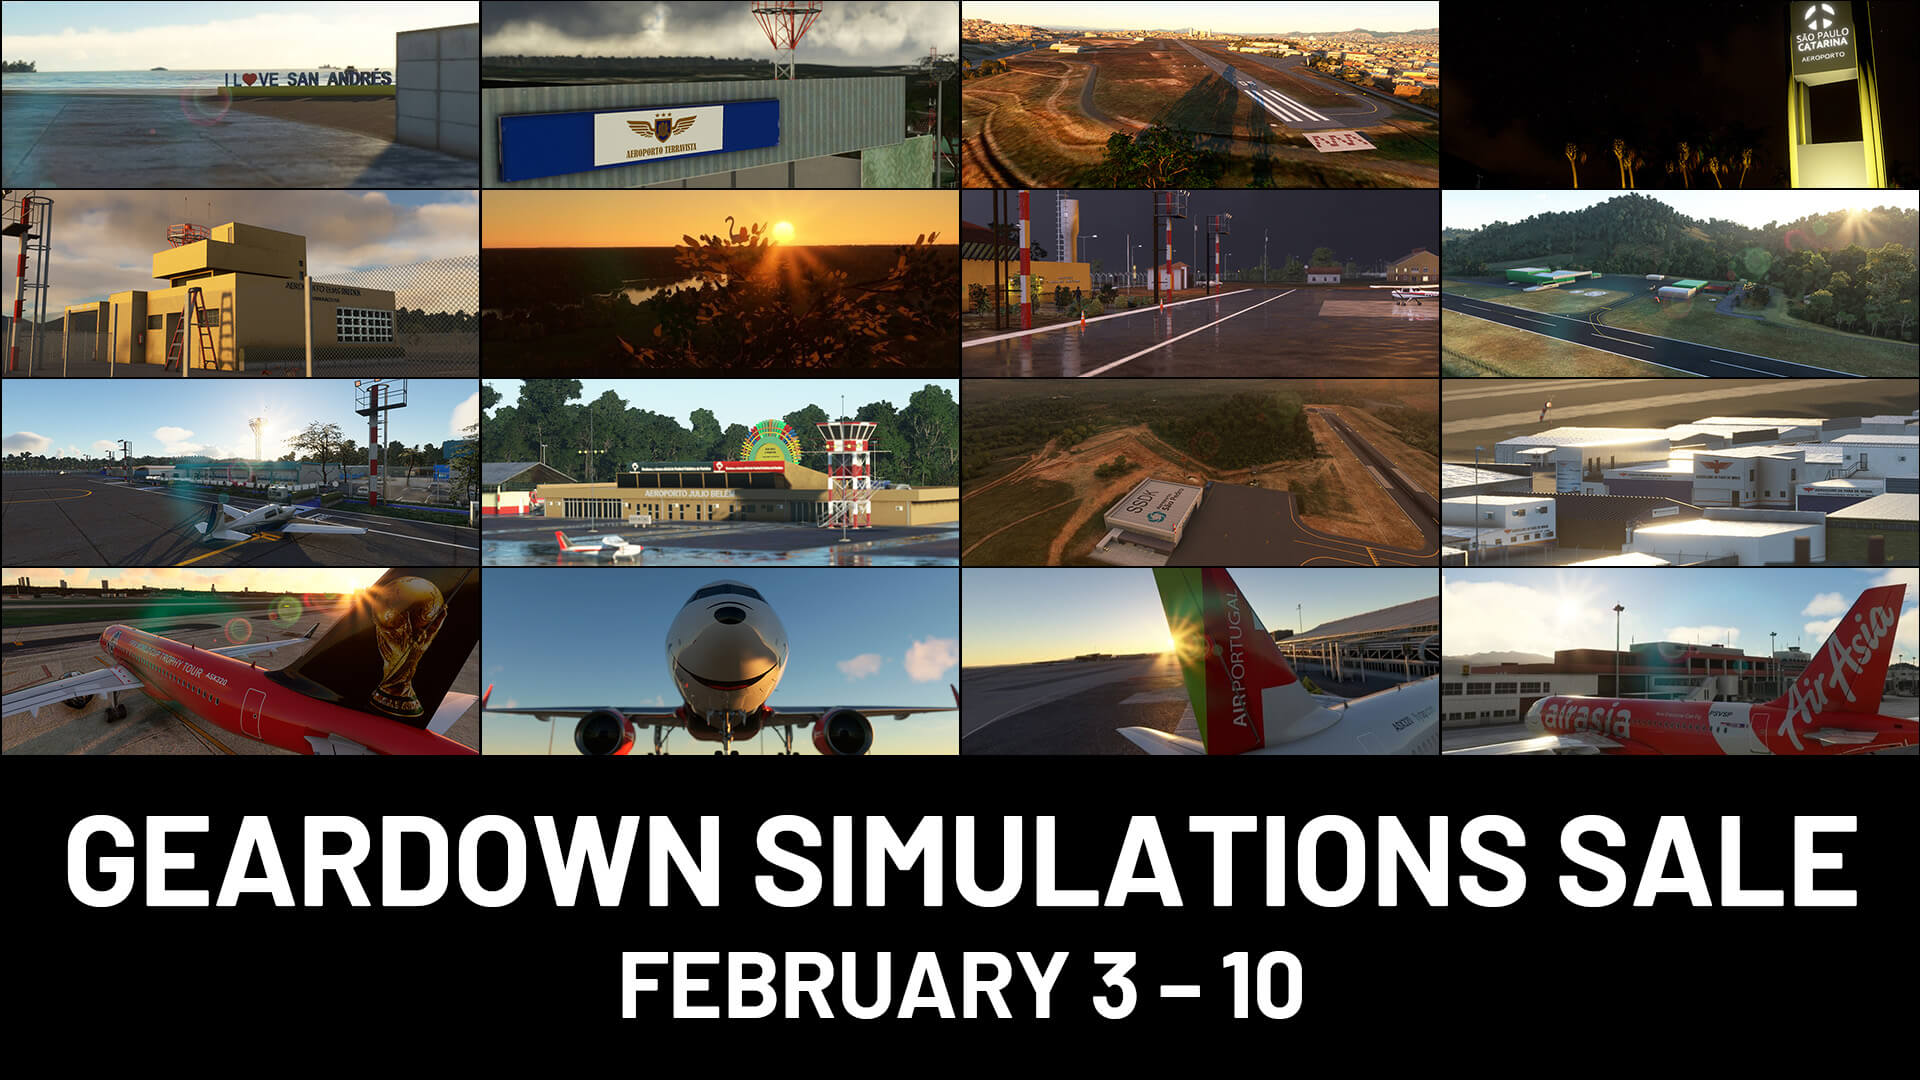 GearDown Simulations Sale February 3-10